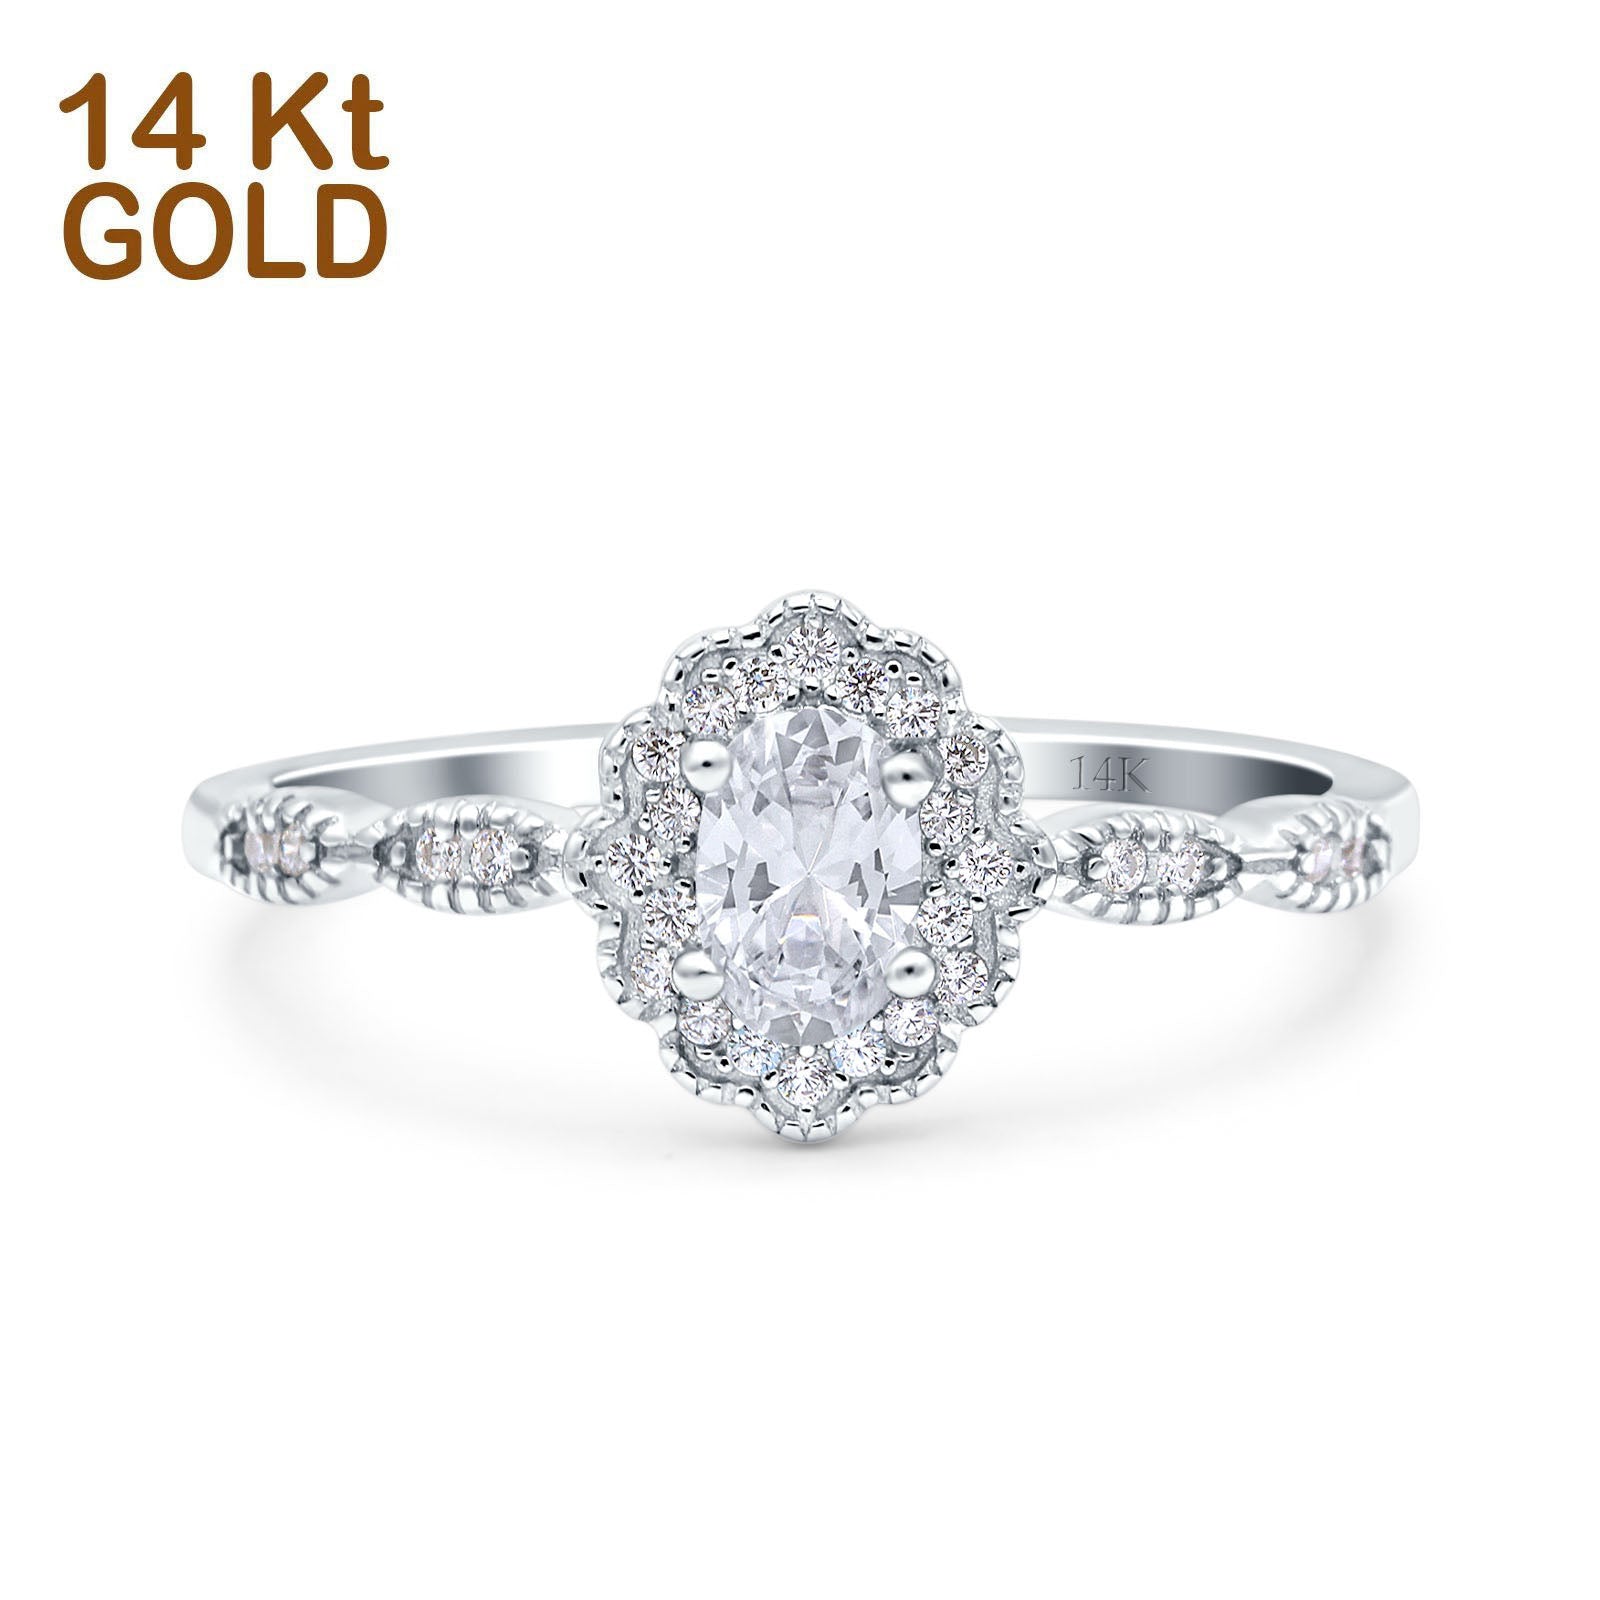 14K Gold Halo Art Deco Oval Shape Bridal Simulated Cubic Zirconia Wedding Engagement Ring